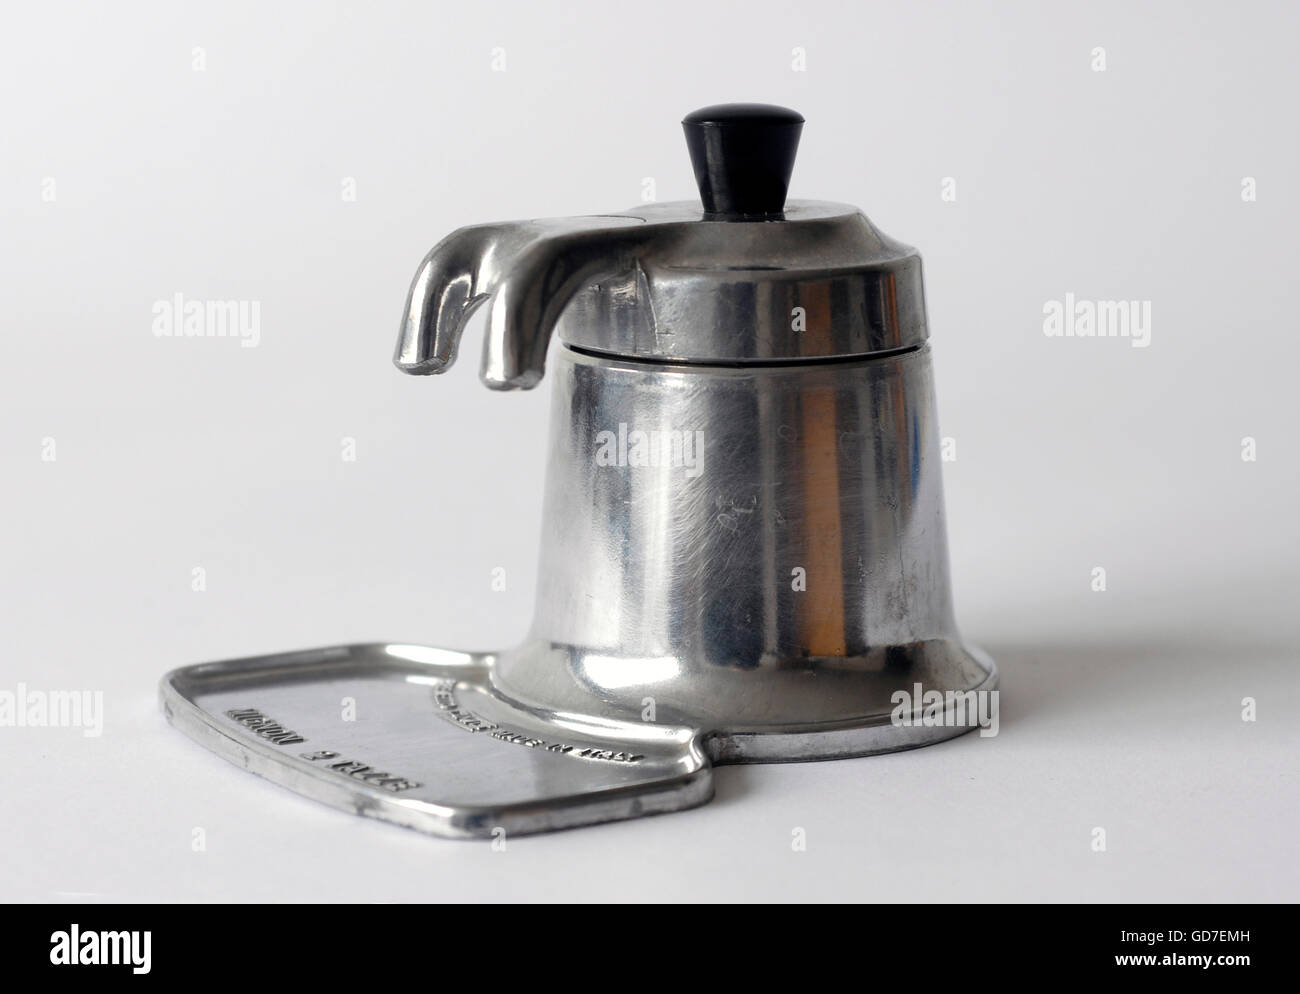 Cafetera italiana de aluminio de dos tazas Fotografía de stock - Alamy